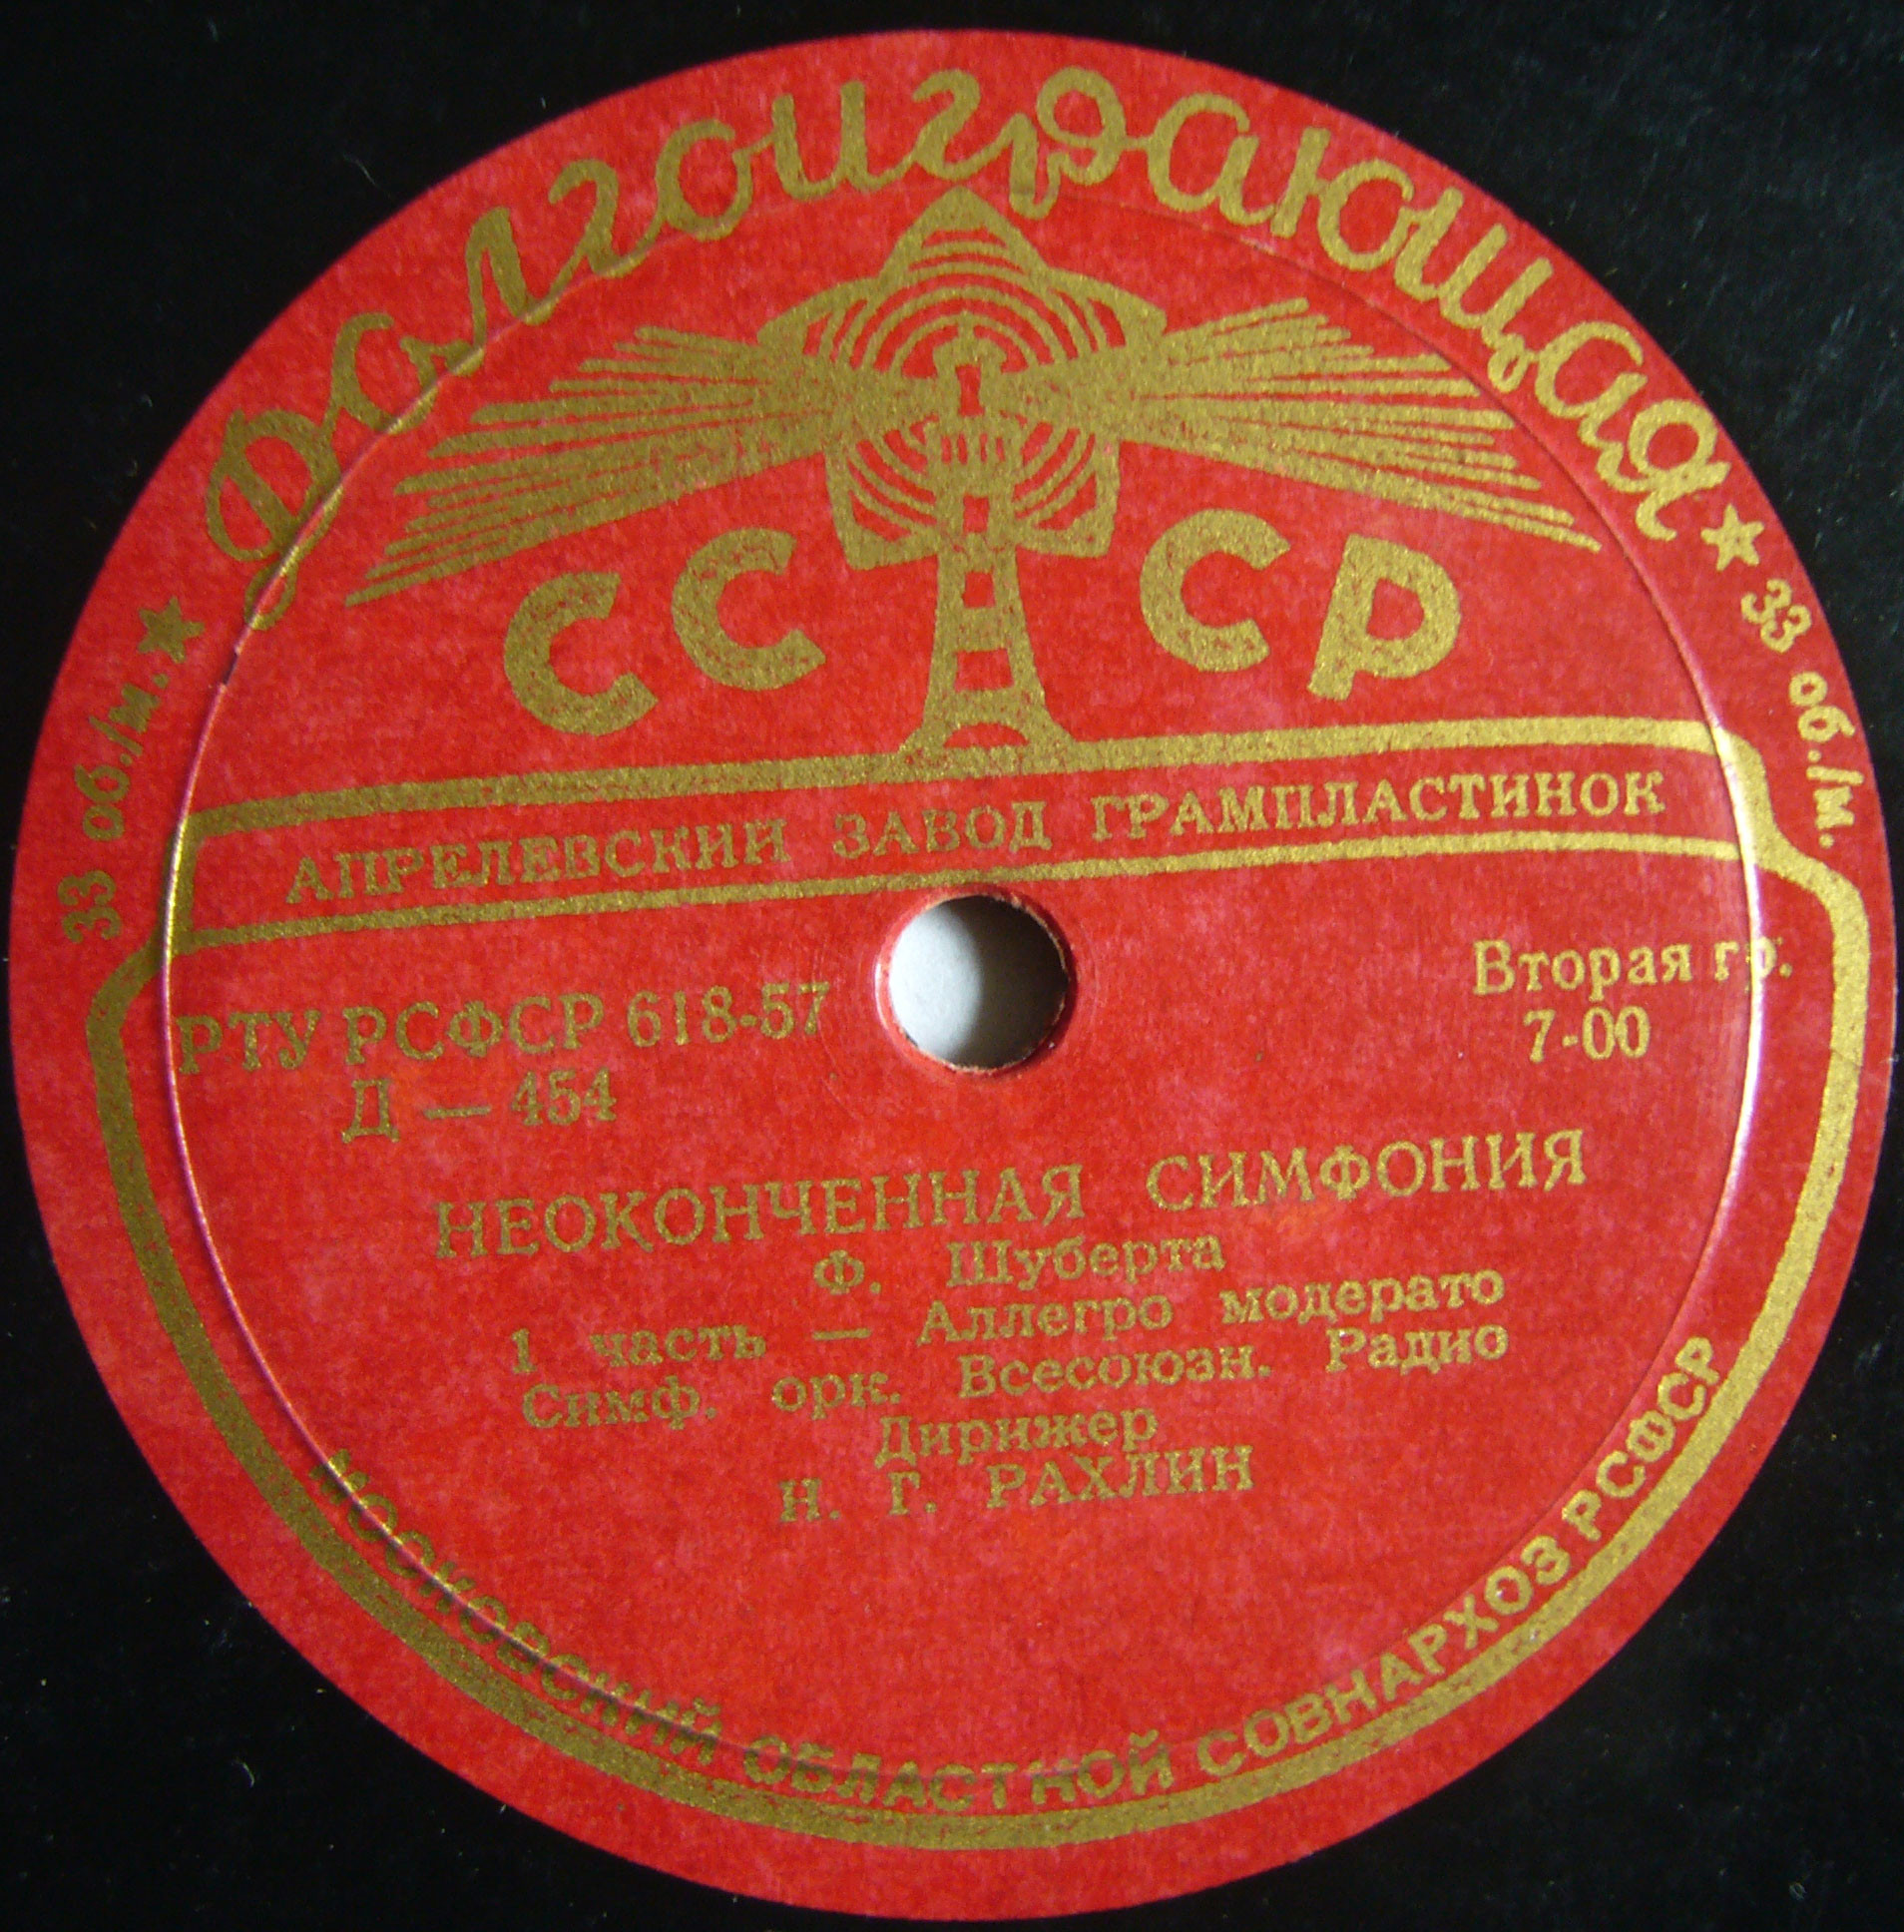 Ф. ШУБЕРТ (1797–1828): Неоконченная симфония (Н. Рахлин)